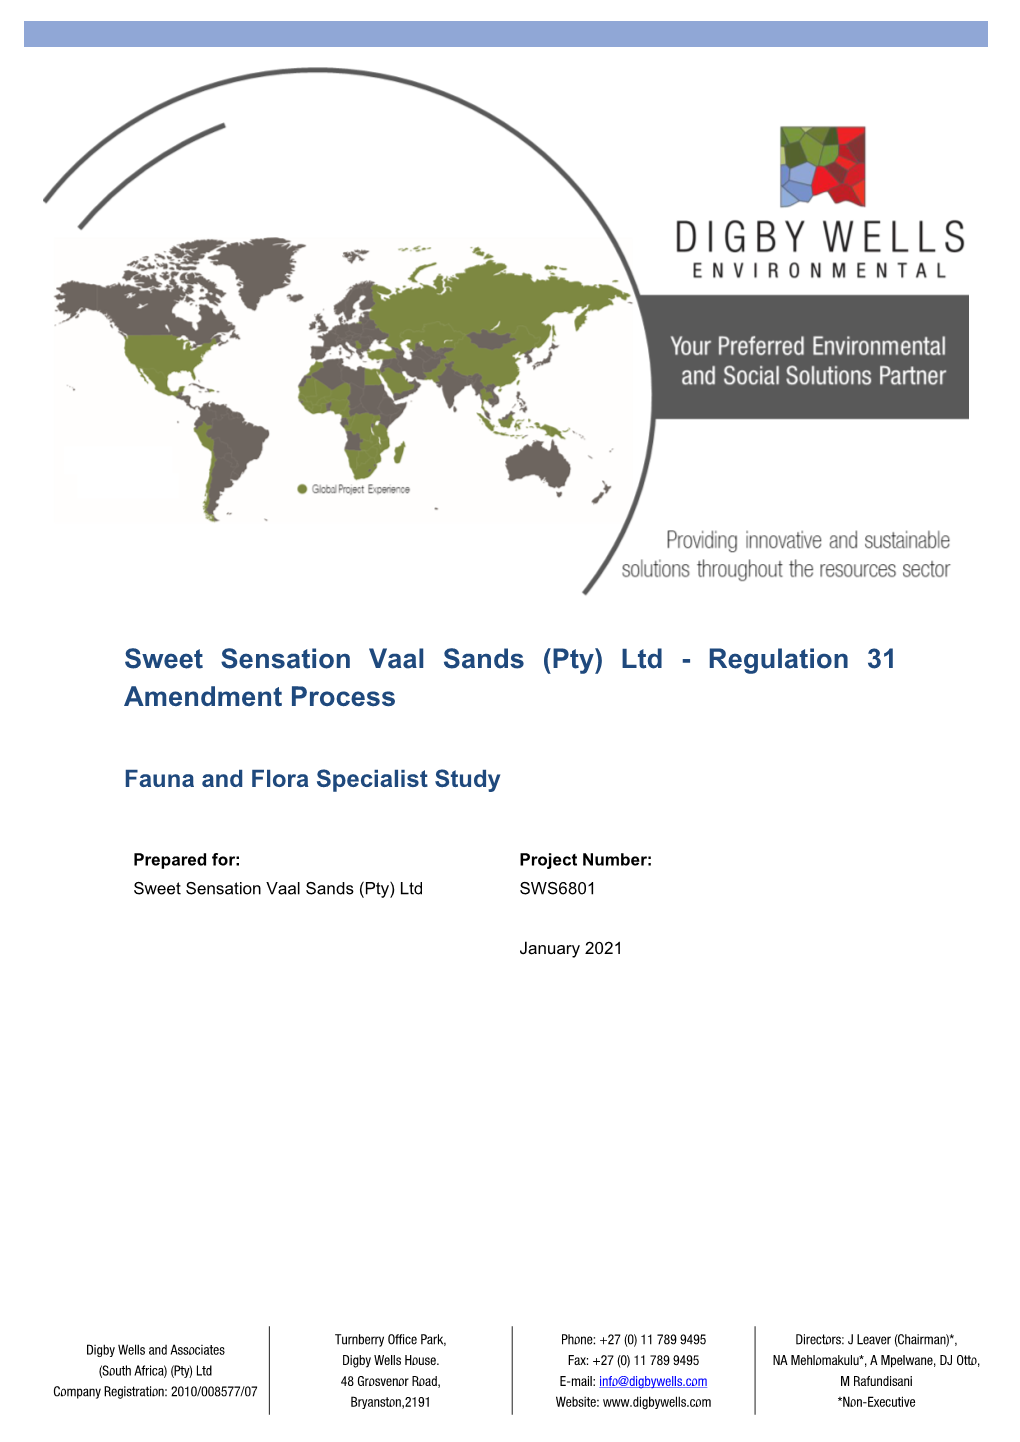 Sweet Sensation Vaal Sands (Pty) Ltd - Regulation 31 Amendment Process